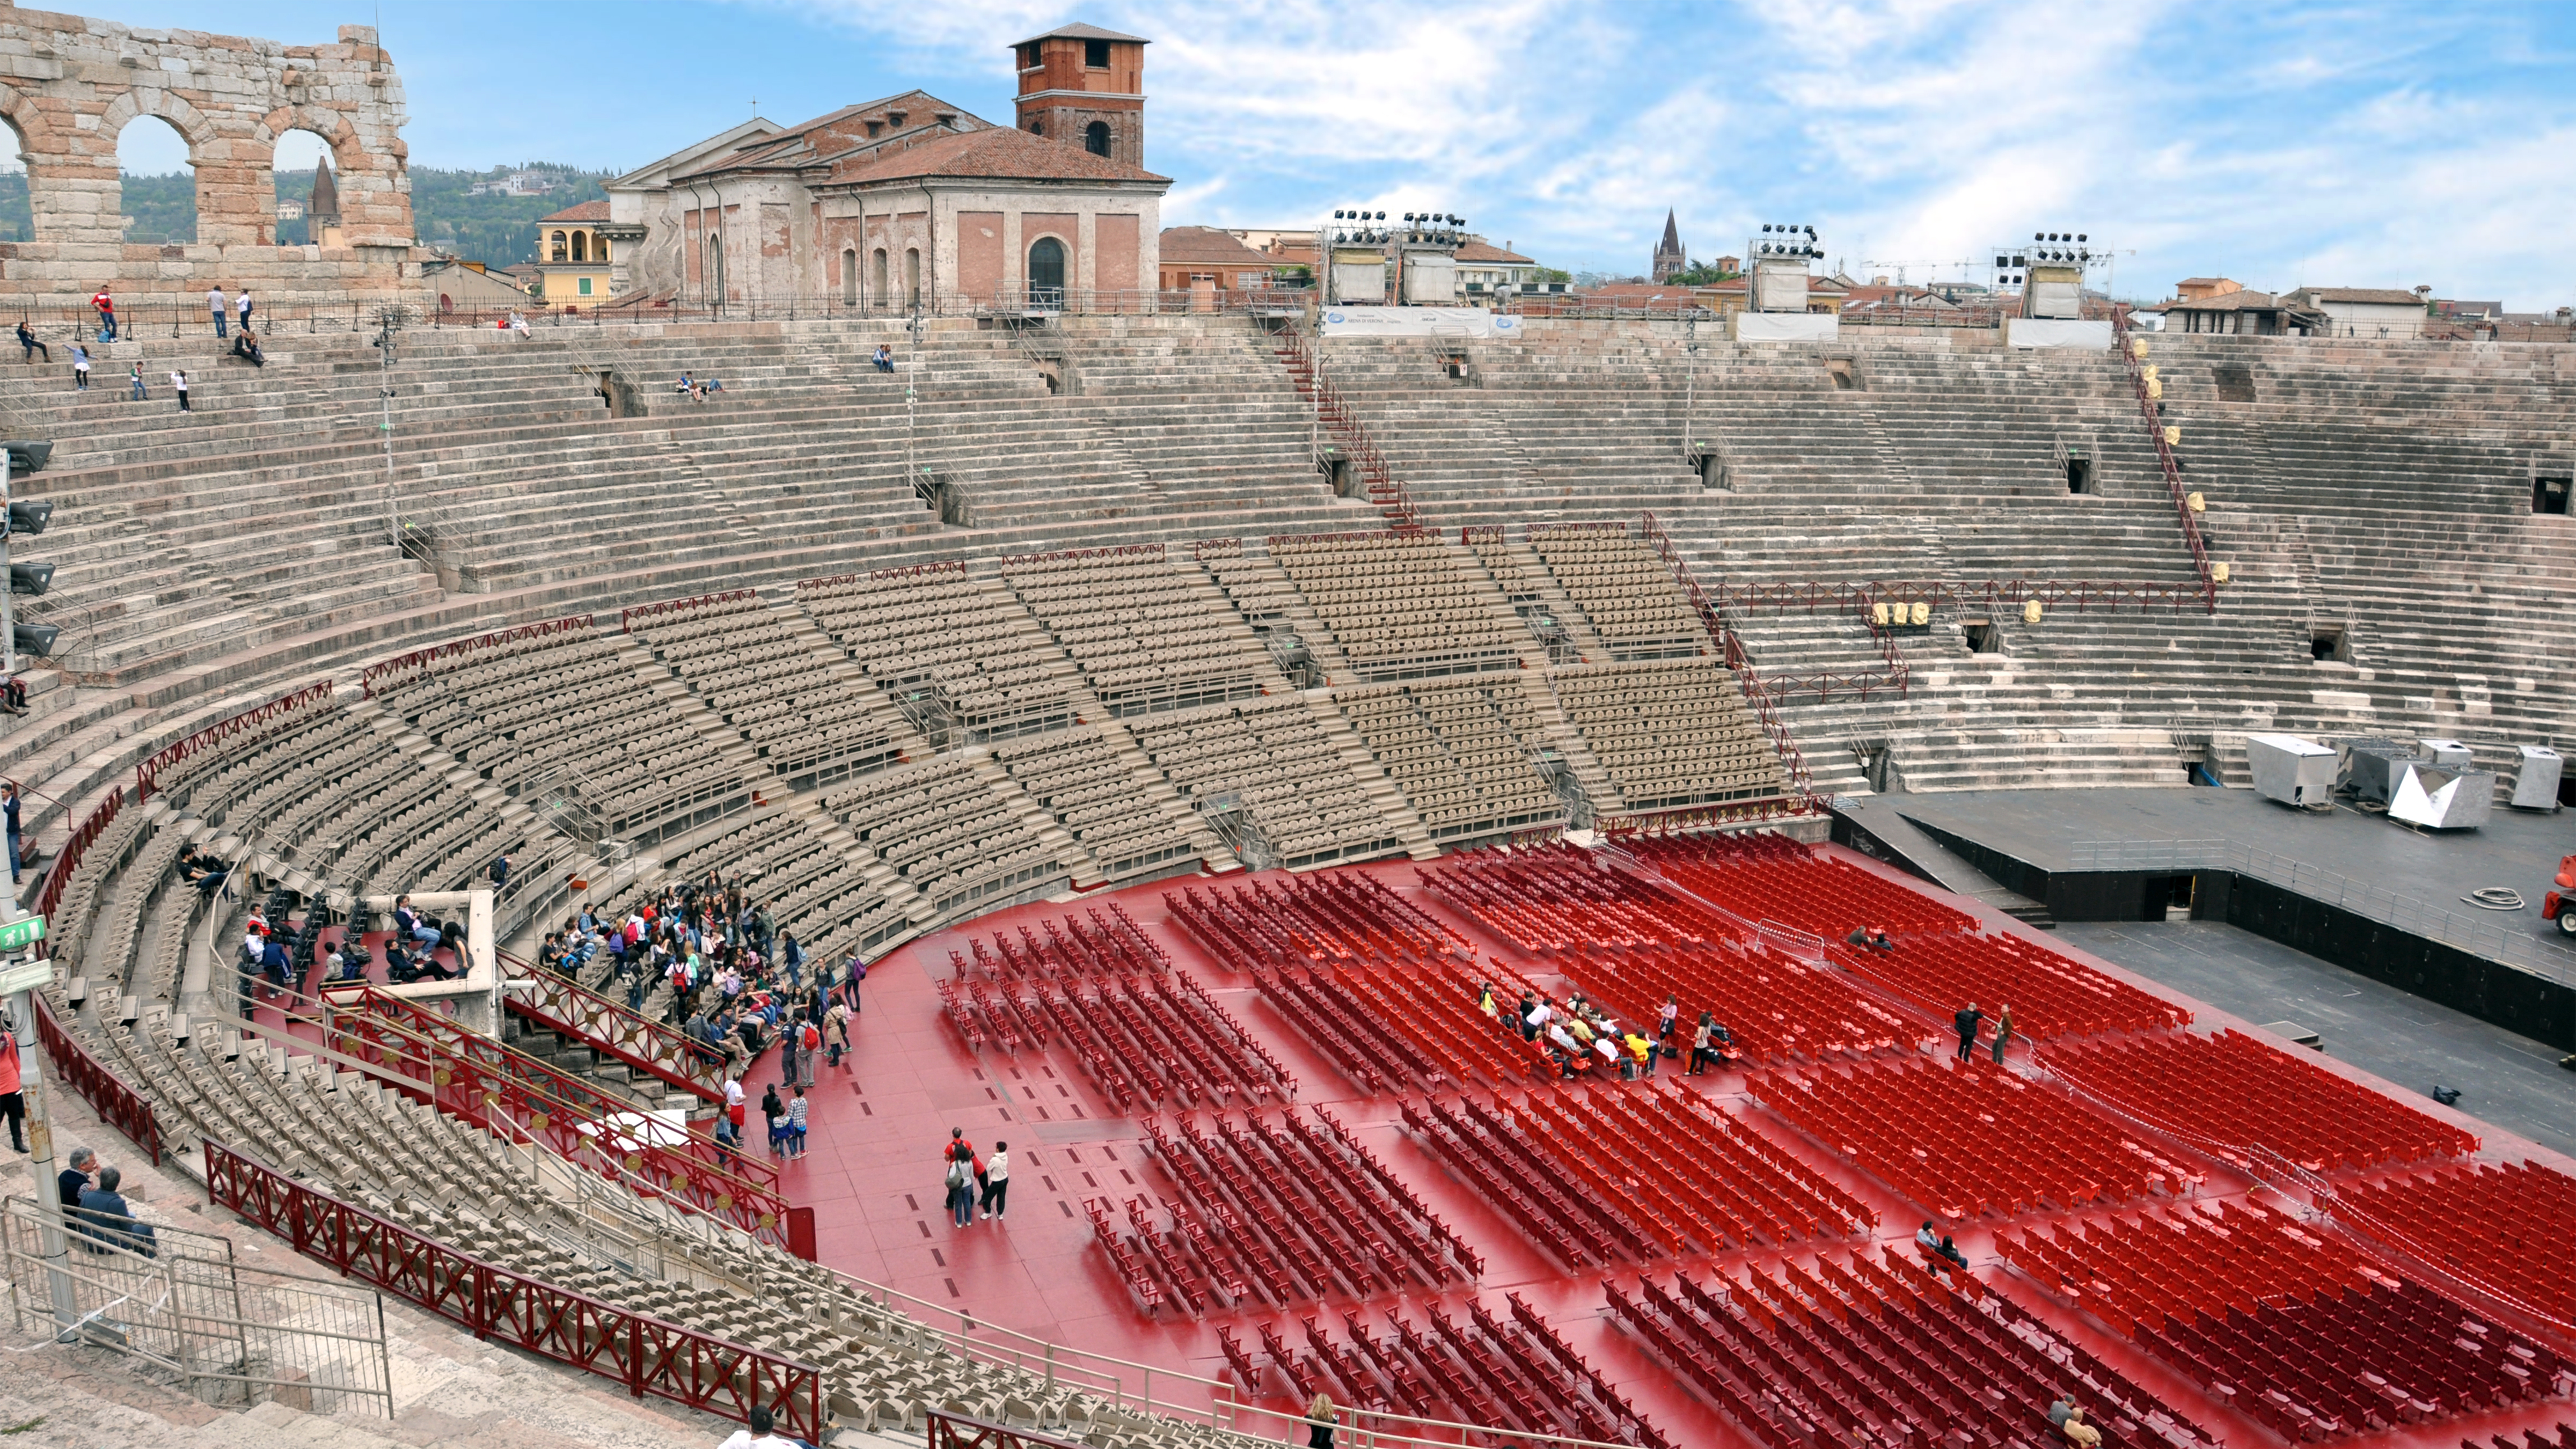 Arena - The Roman Amphitheater in Verona